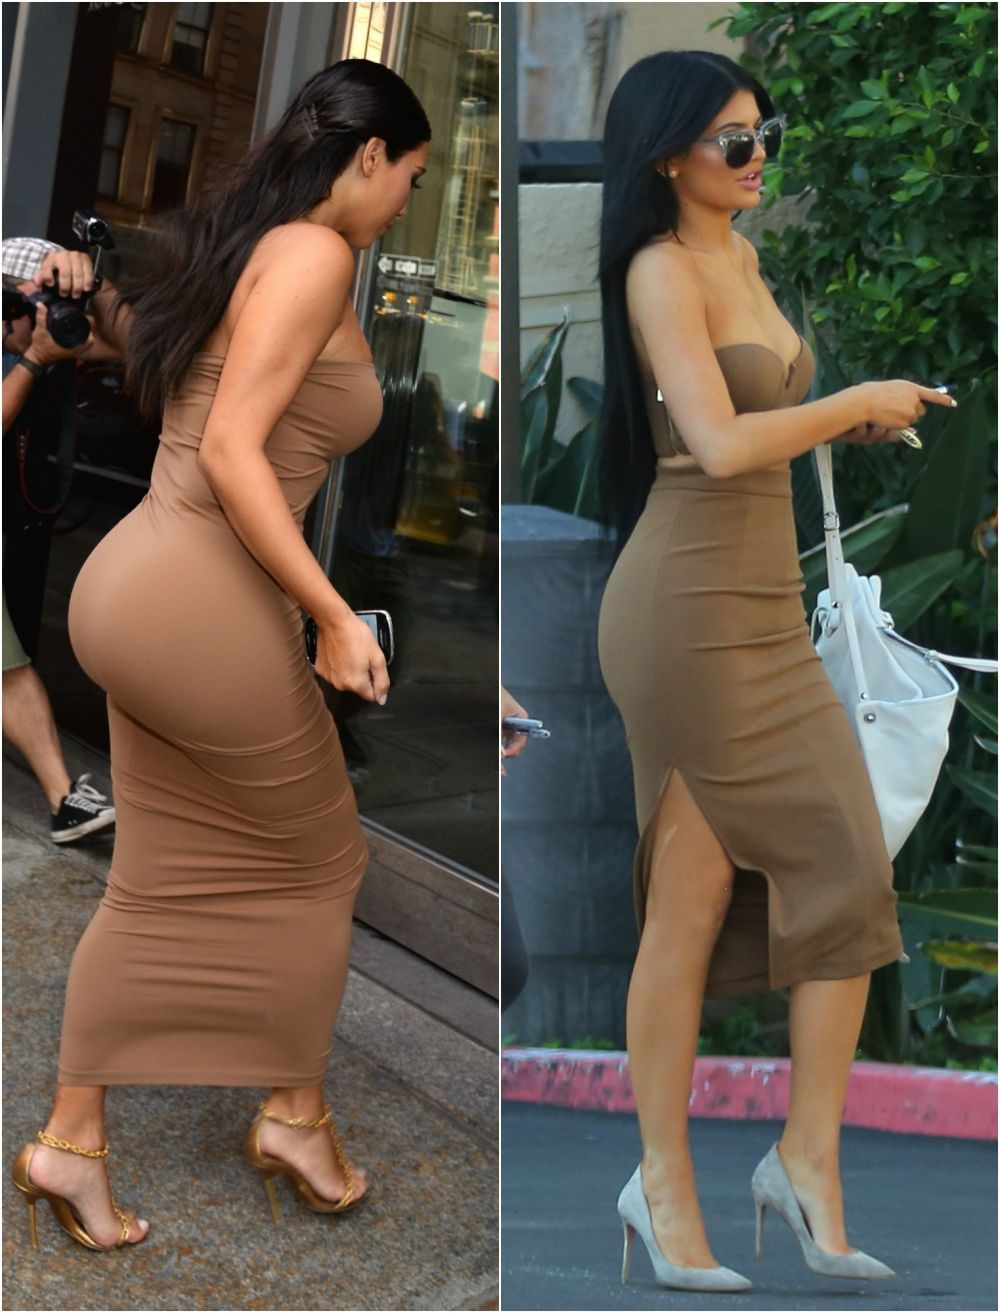 O sirena in plina strada! Kylie Jenner isi prinde din urma sora mai mare, Kim Kardashian, la dimensiunile posteriorului